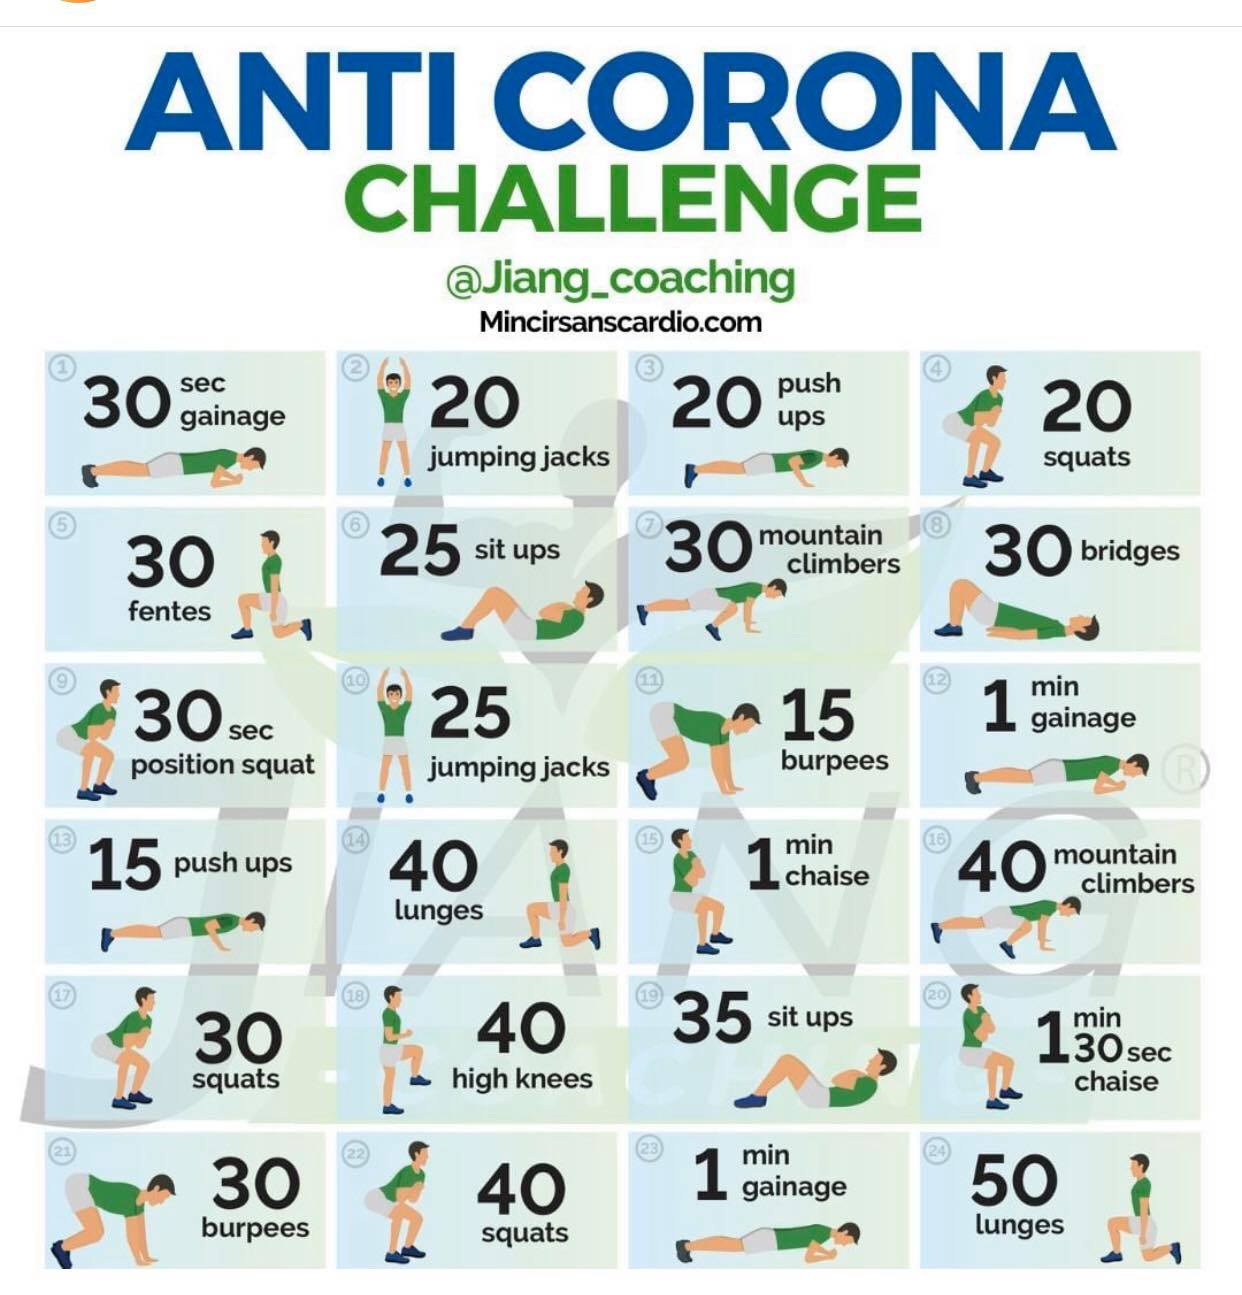 Anti Corona challenge - Home workout. - Cardio - ABS - legs #HomeWorkout #AntiCorona #ABS #LEGS #Squats #Plank #Cardio #Workout